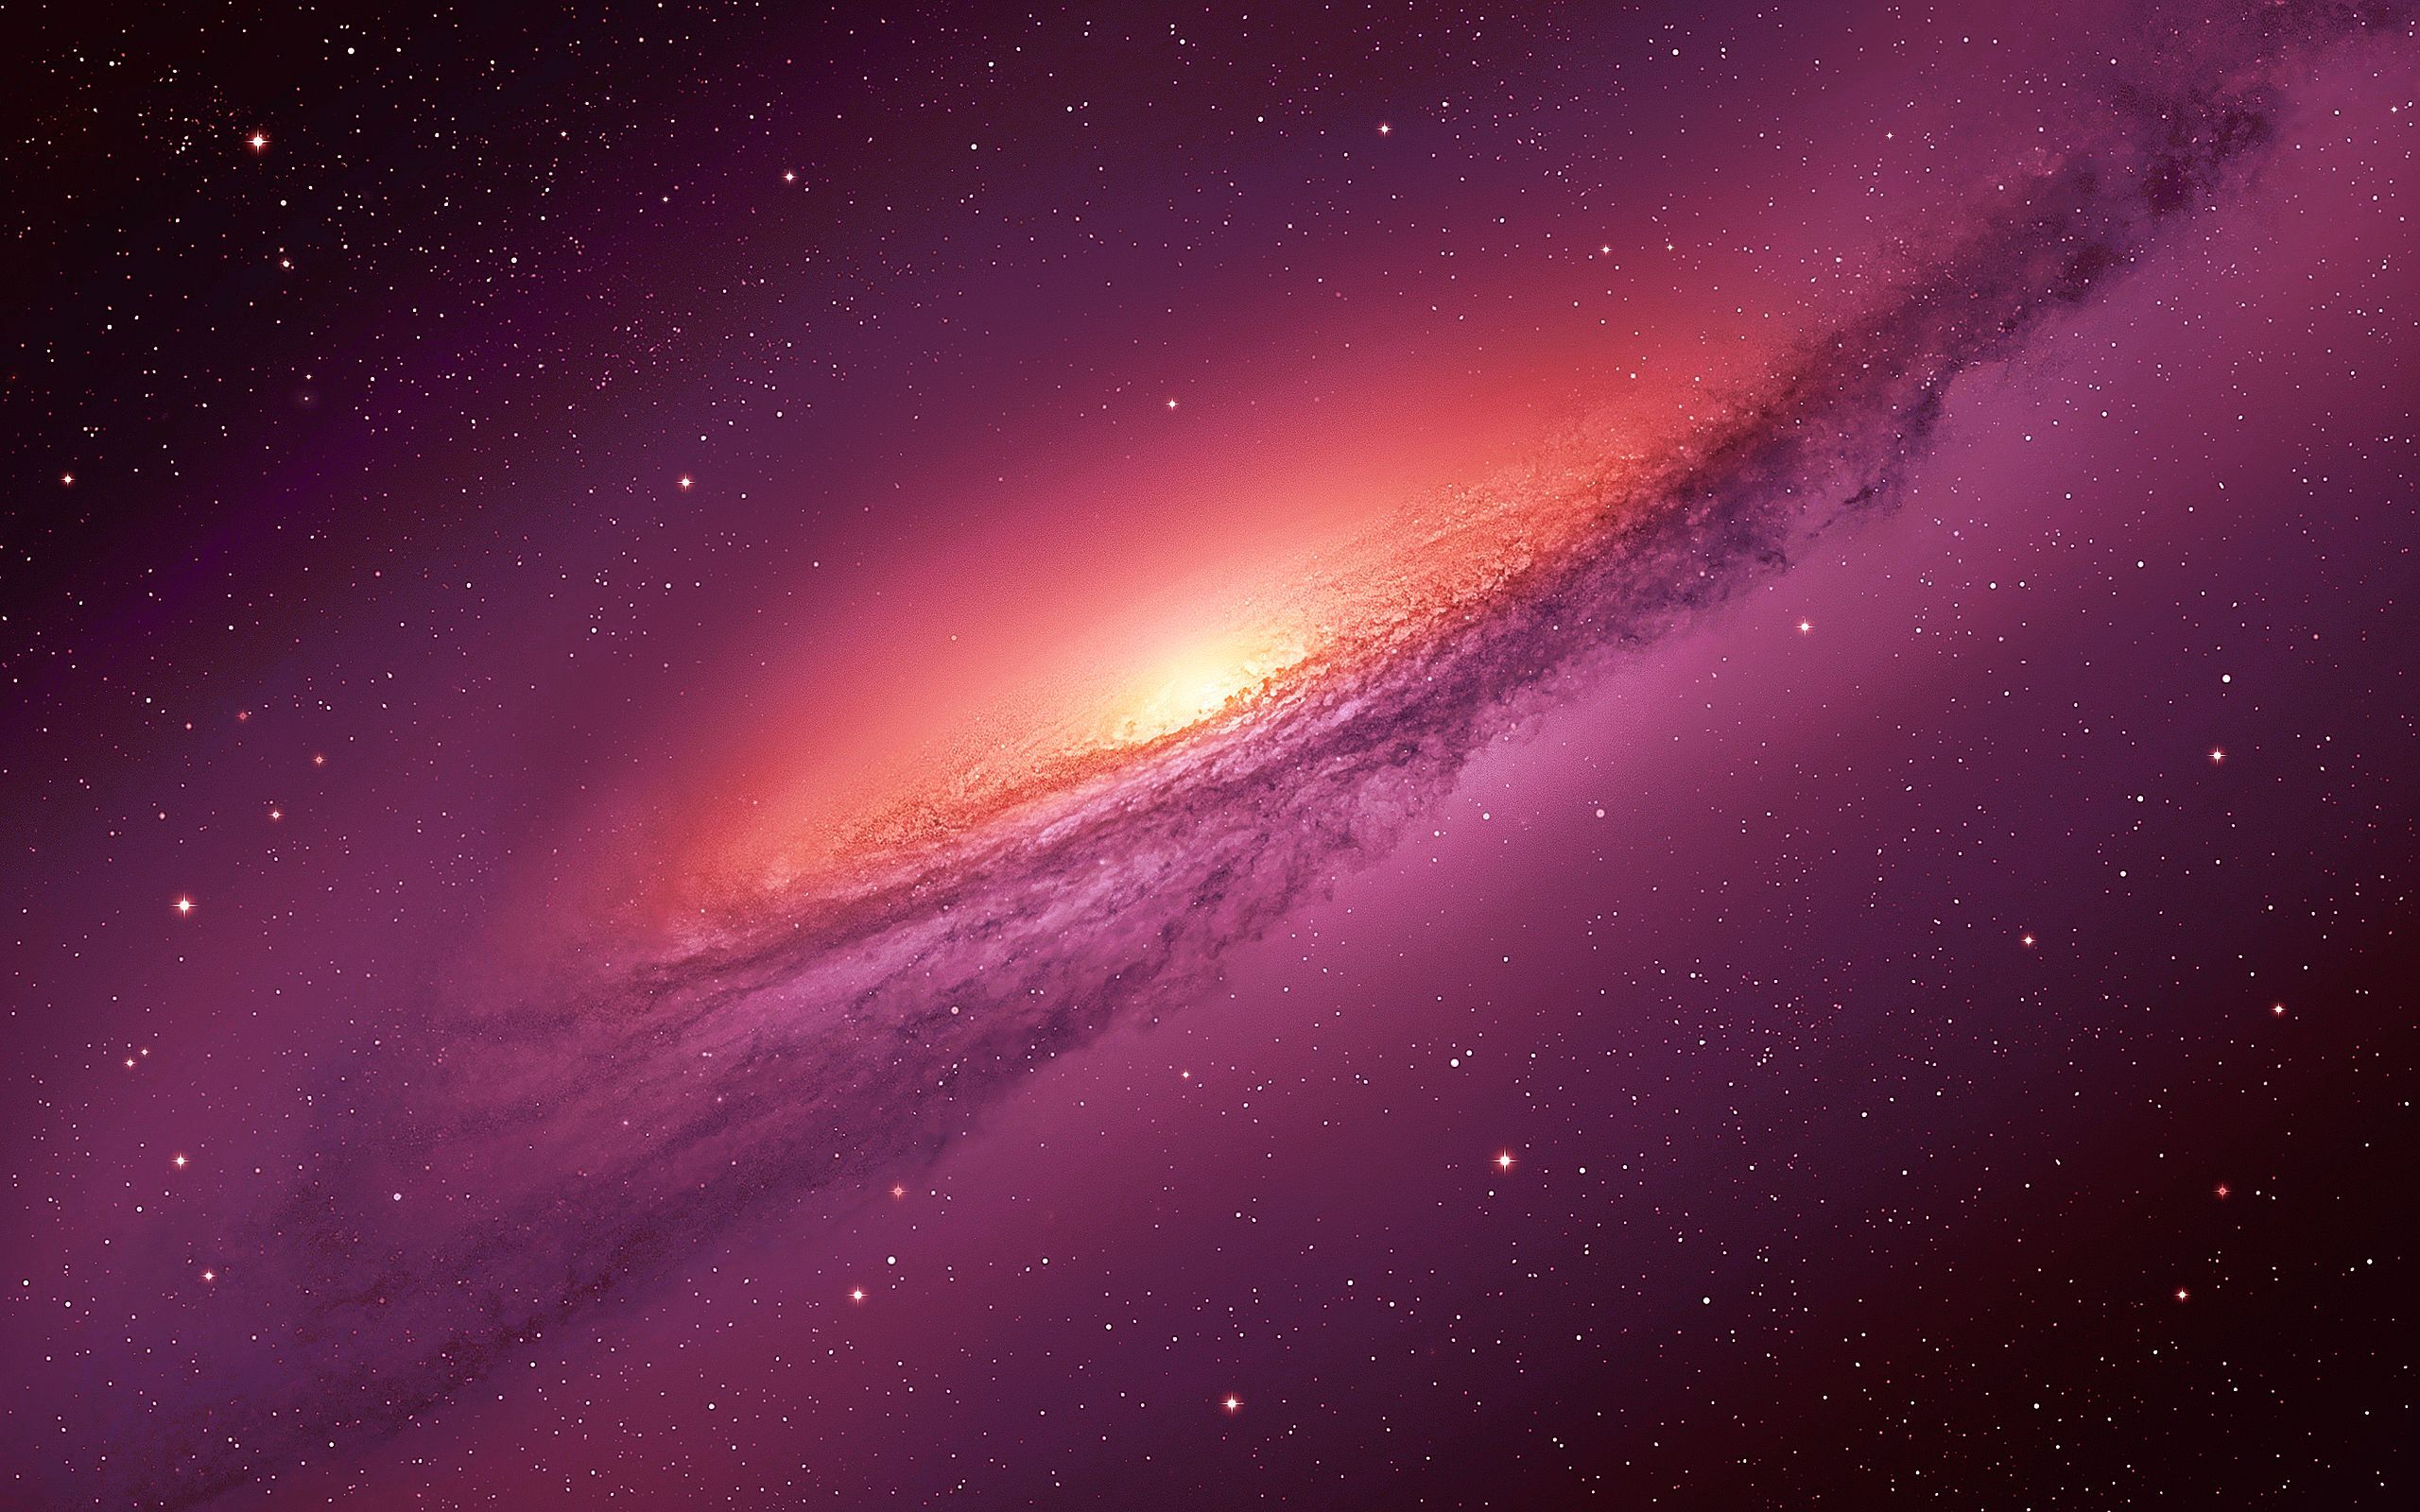 Awesome Mac Os X Mountain Lion stars Galaxy sacpe background Image